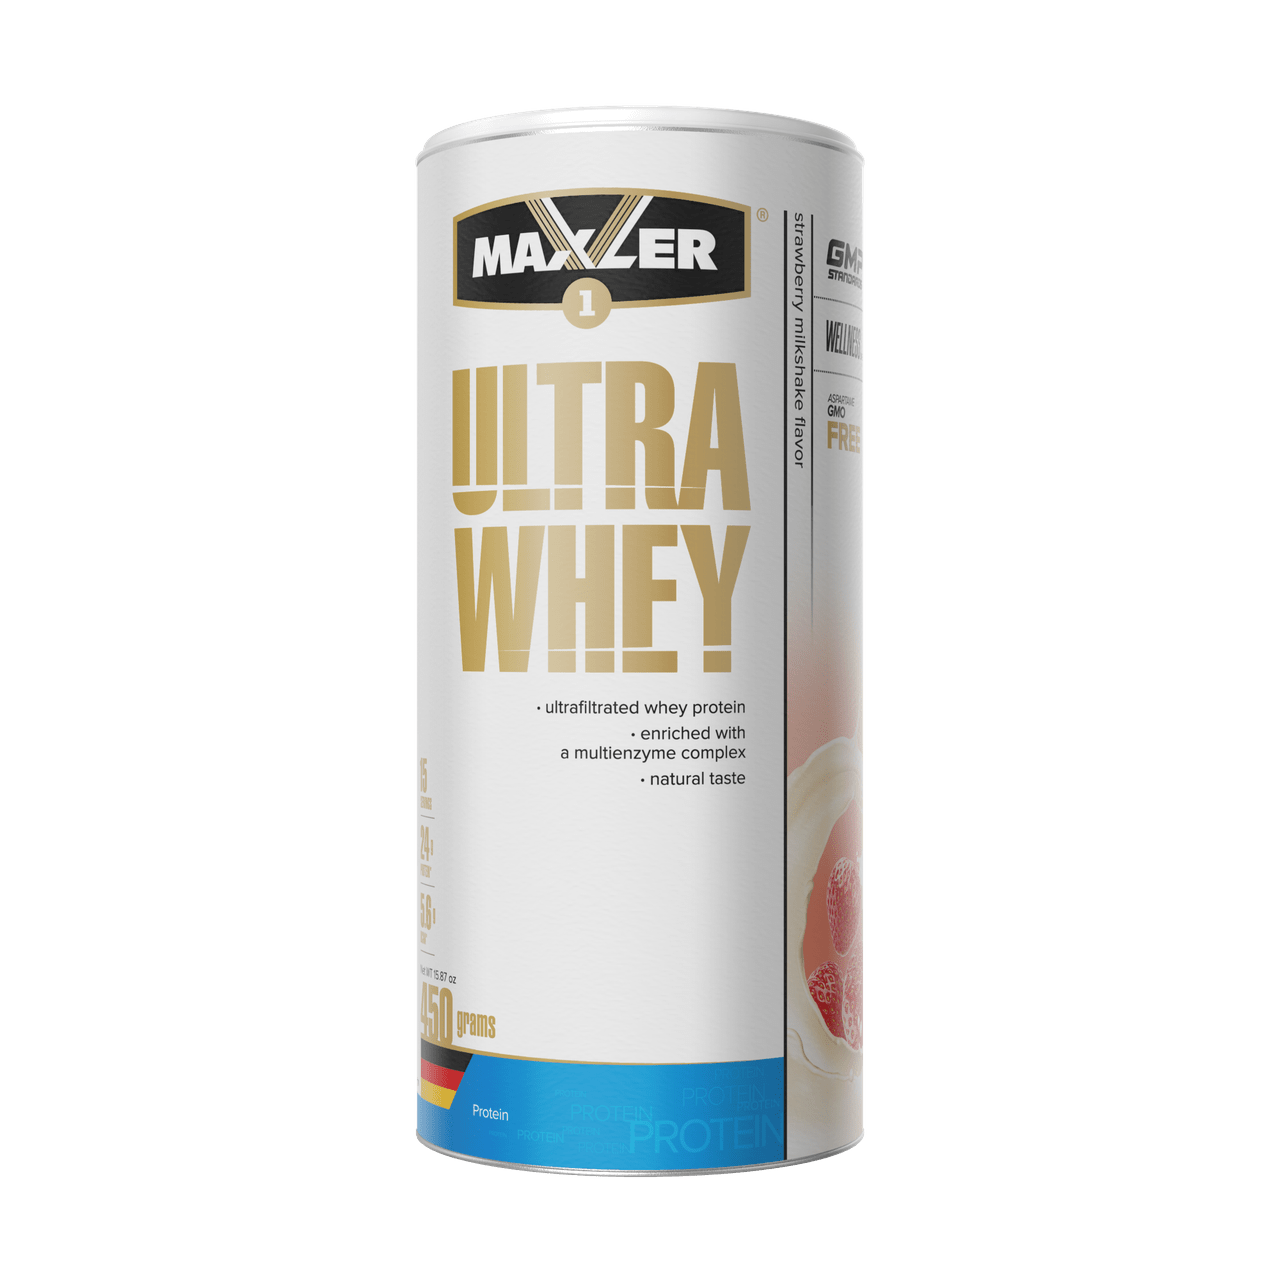 Maxler Maxler Ultra Whey 450 г – клубничный милкшейк, , 0.45 